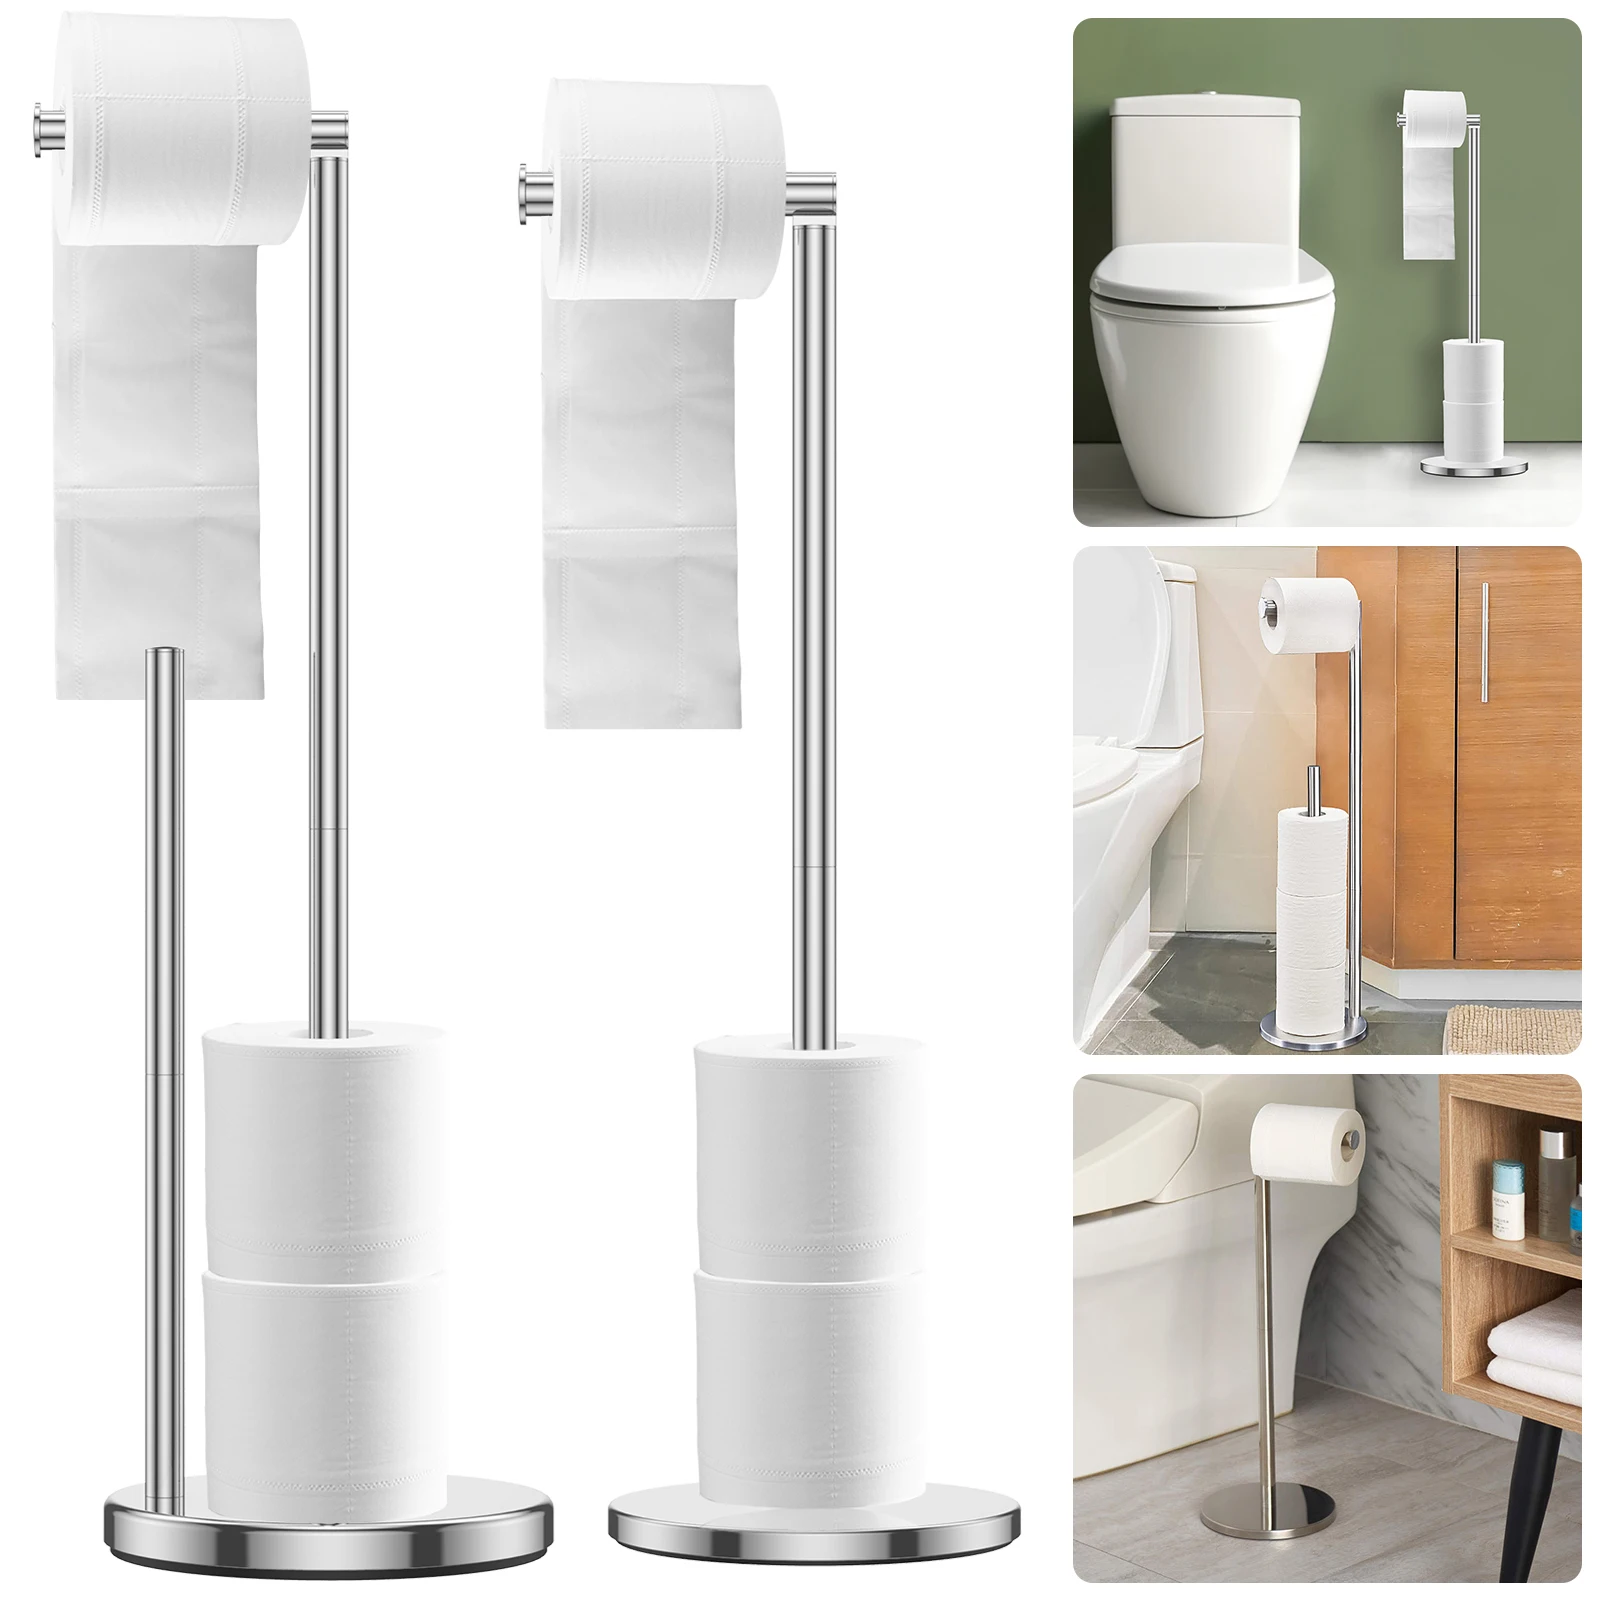 https://ae01.alicdn.com/kf/S505f2f9ae6424cd886ec60bad0cd75abs/Freestanding-Toilet-Roll-Holders-Stainless-Steel-Toilet-Paper-Stand-Folding-Paper-Base-Anti-Rust-Space-Bathroom.jpg